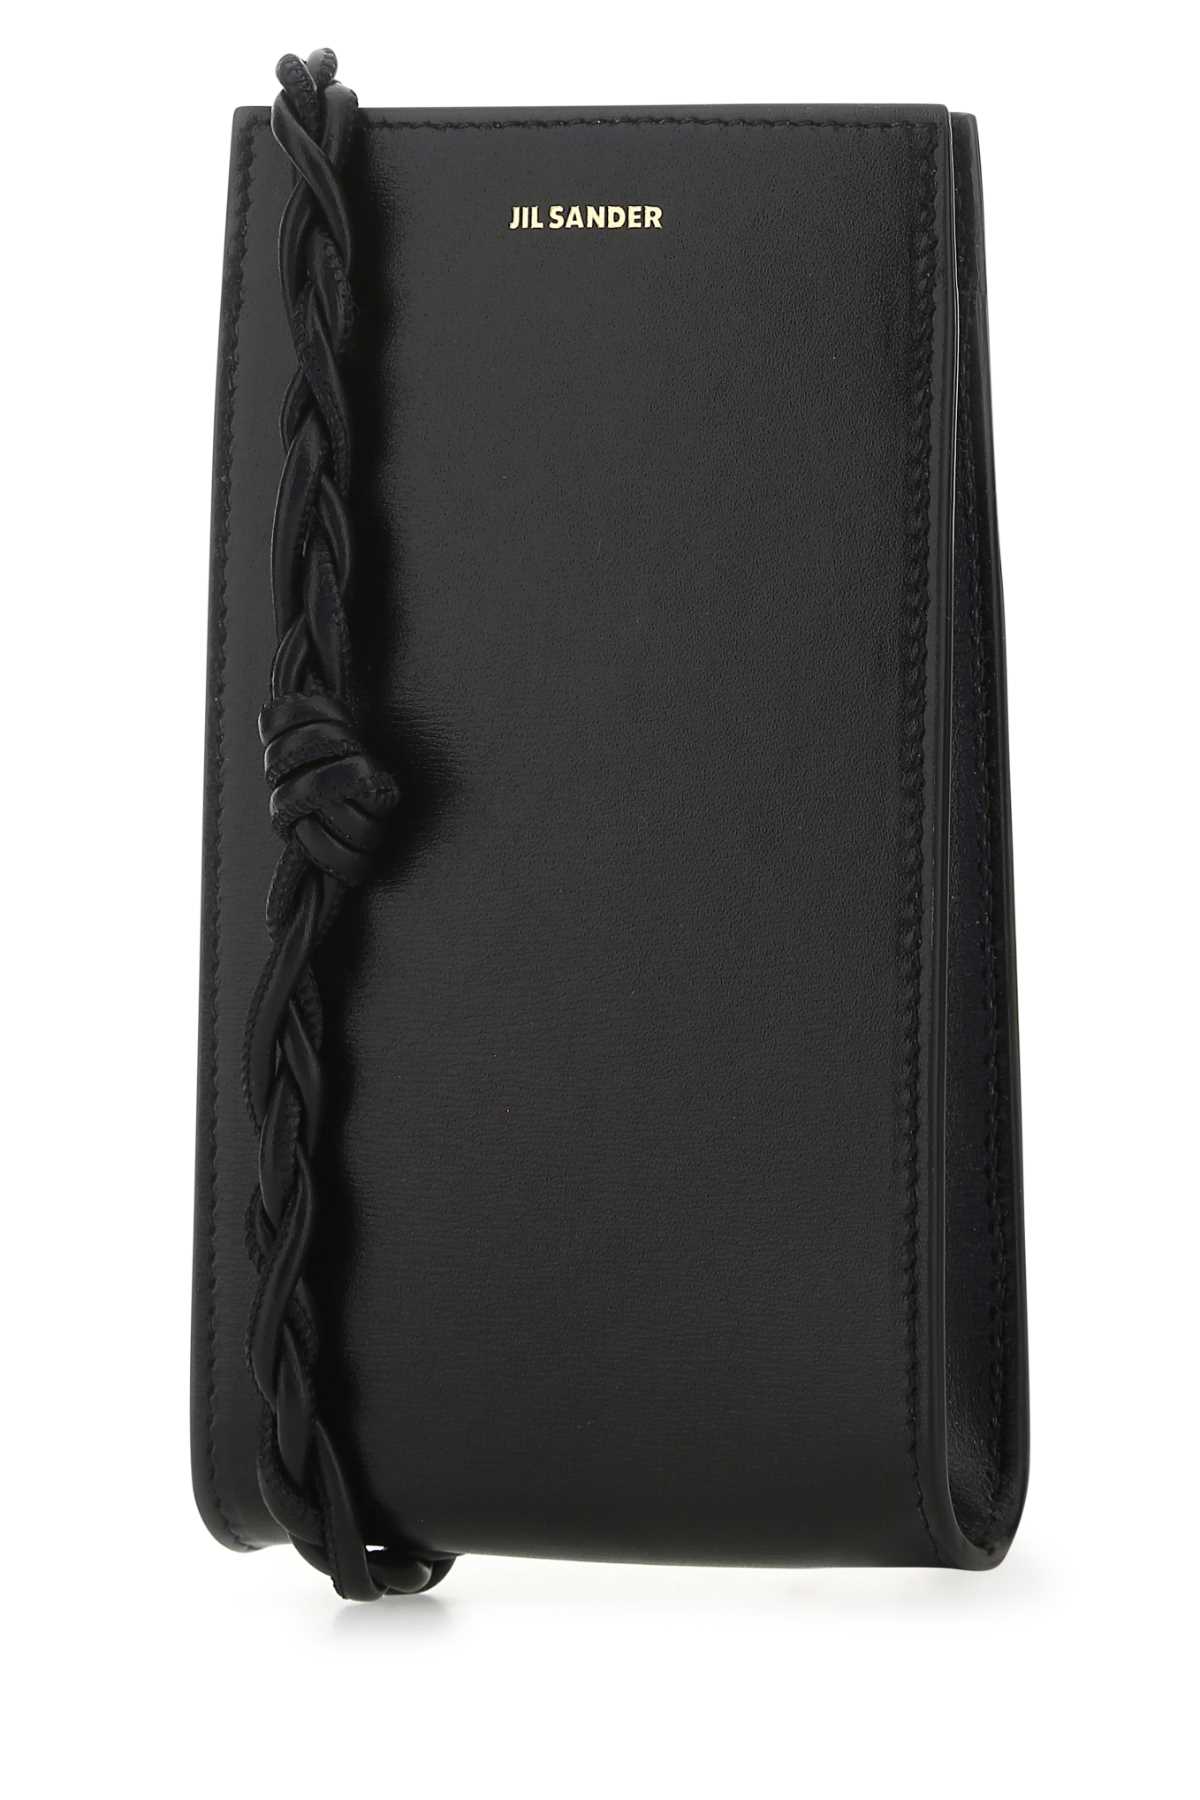 Jil Sander Black Leather Phone Case In 001